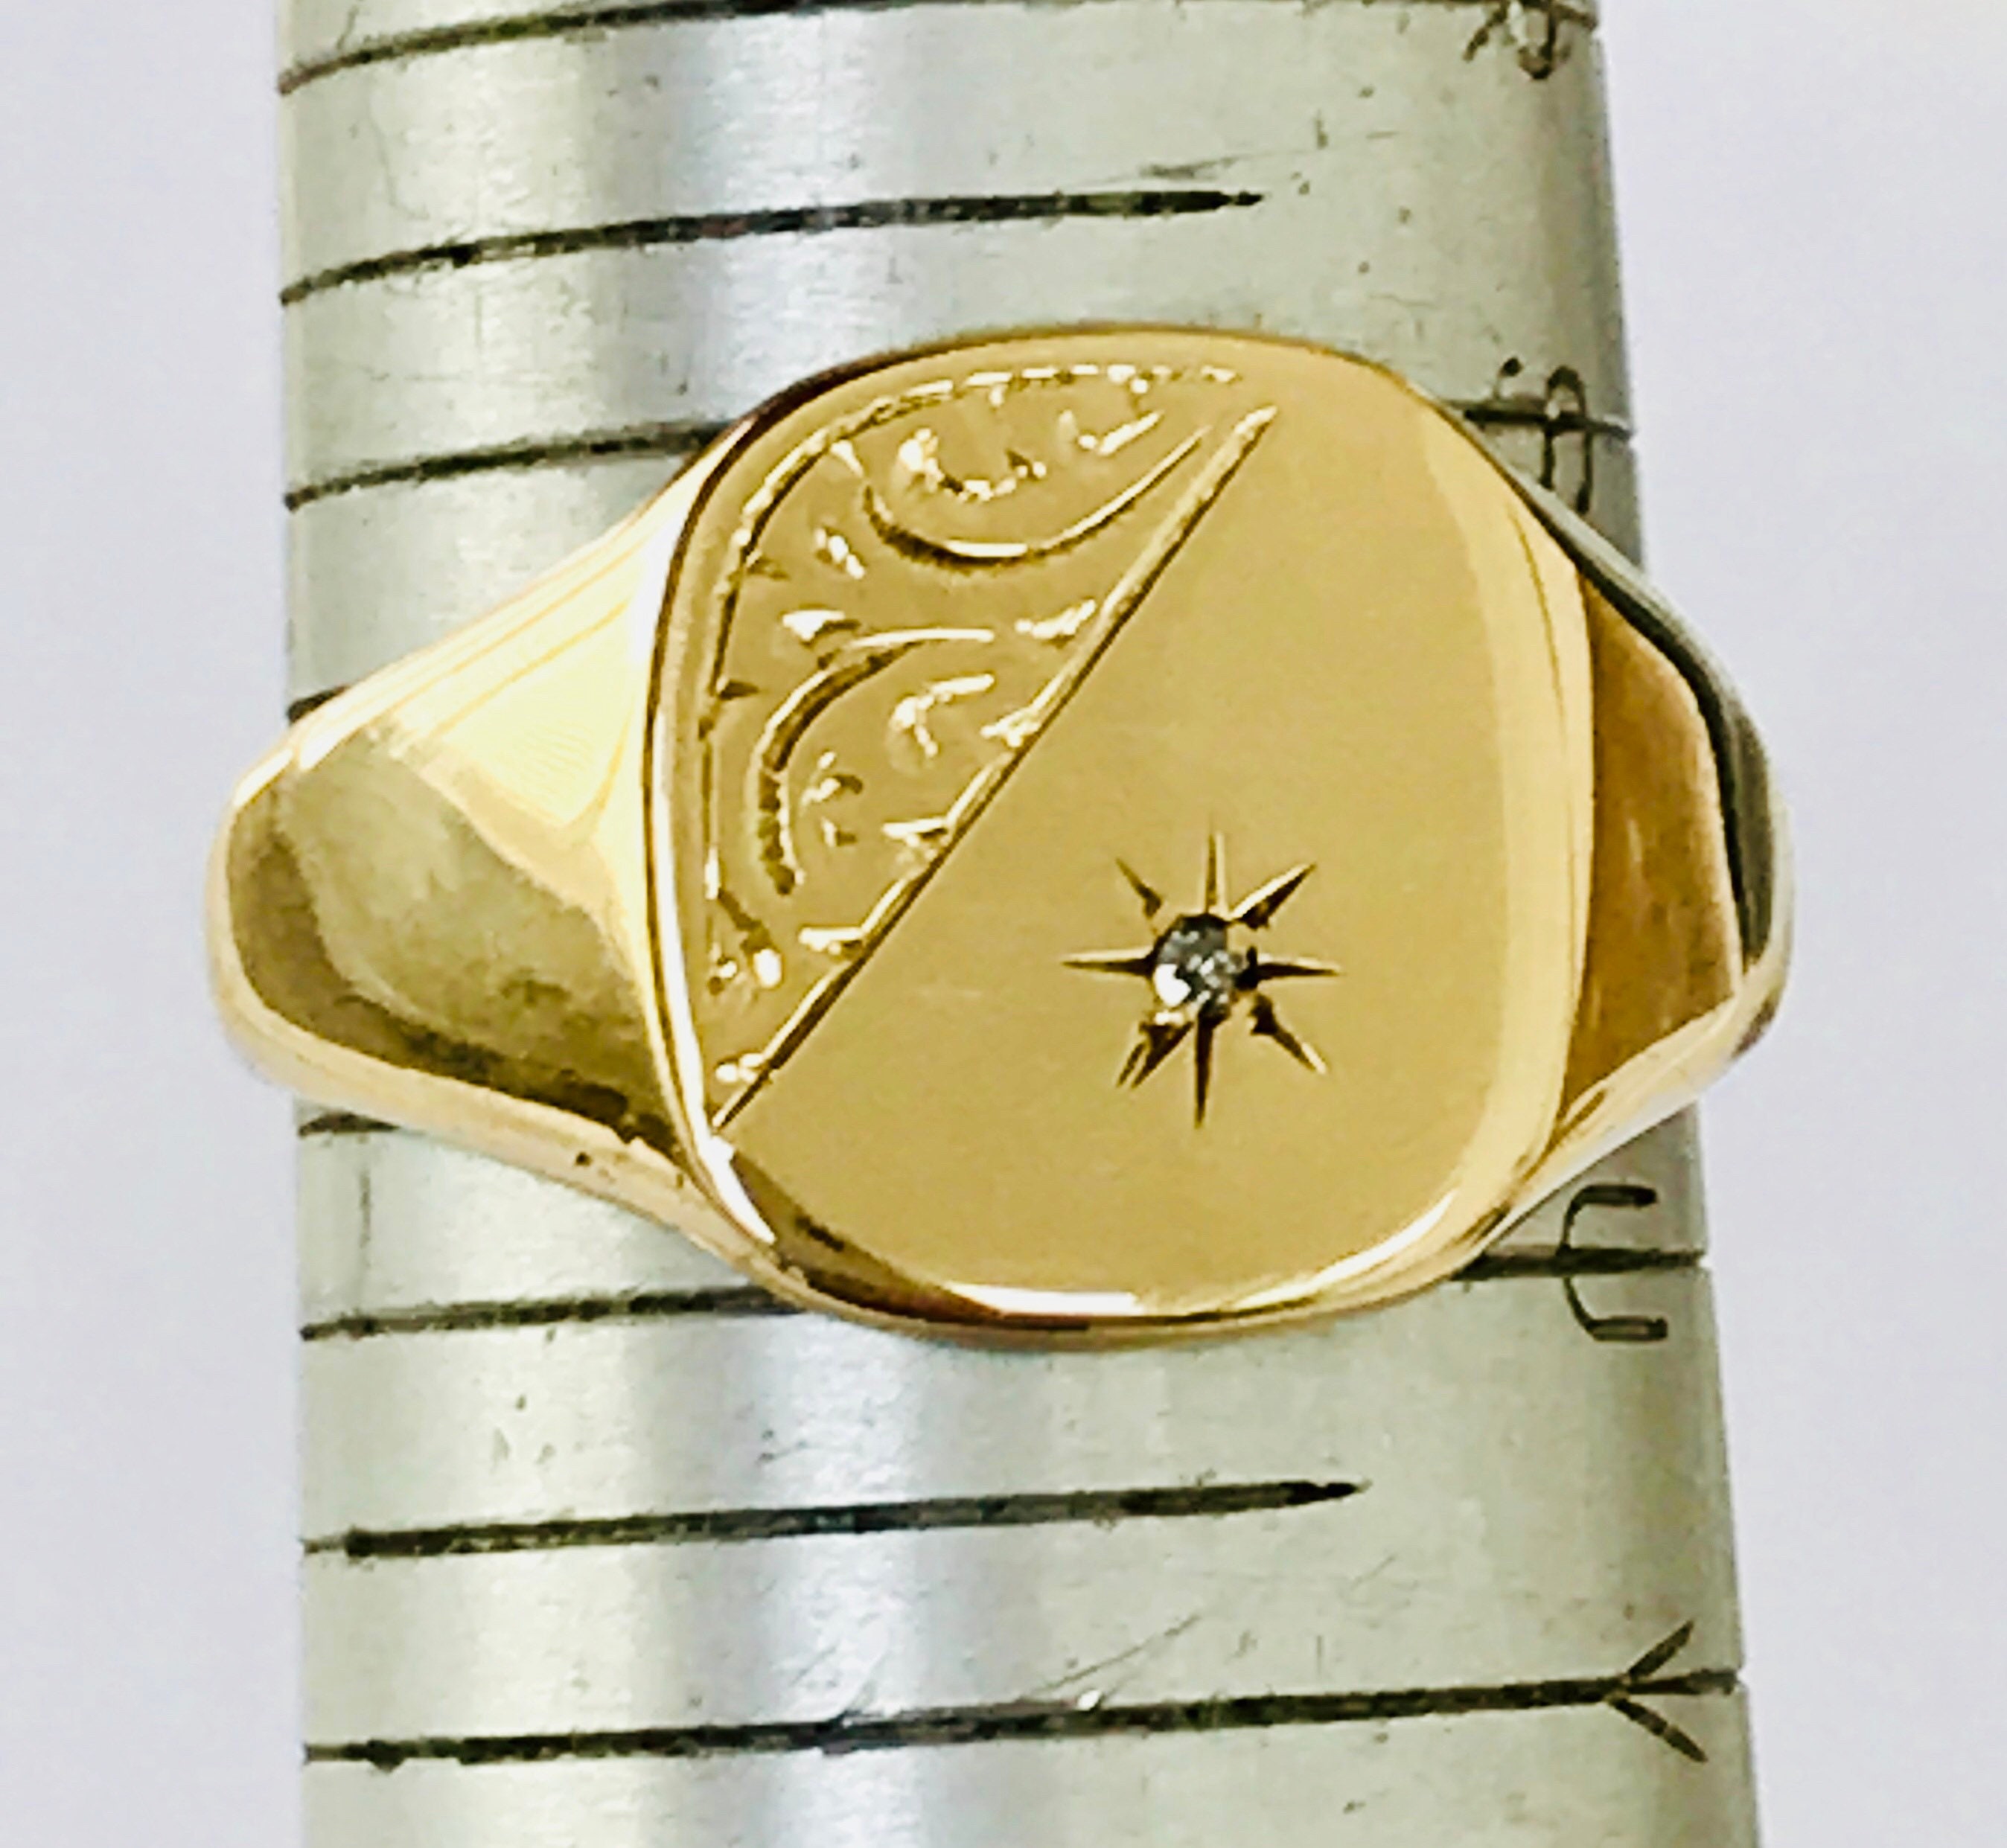 Superb vintage 9ct yellow gold Diamond signet ring - fully hallmarked